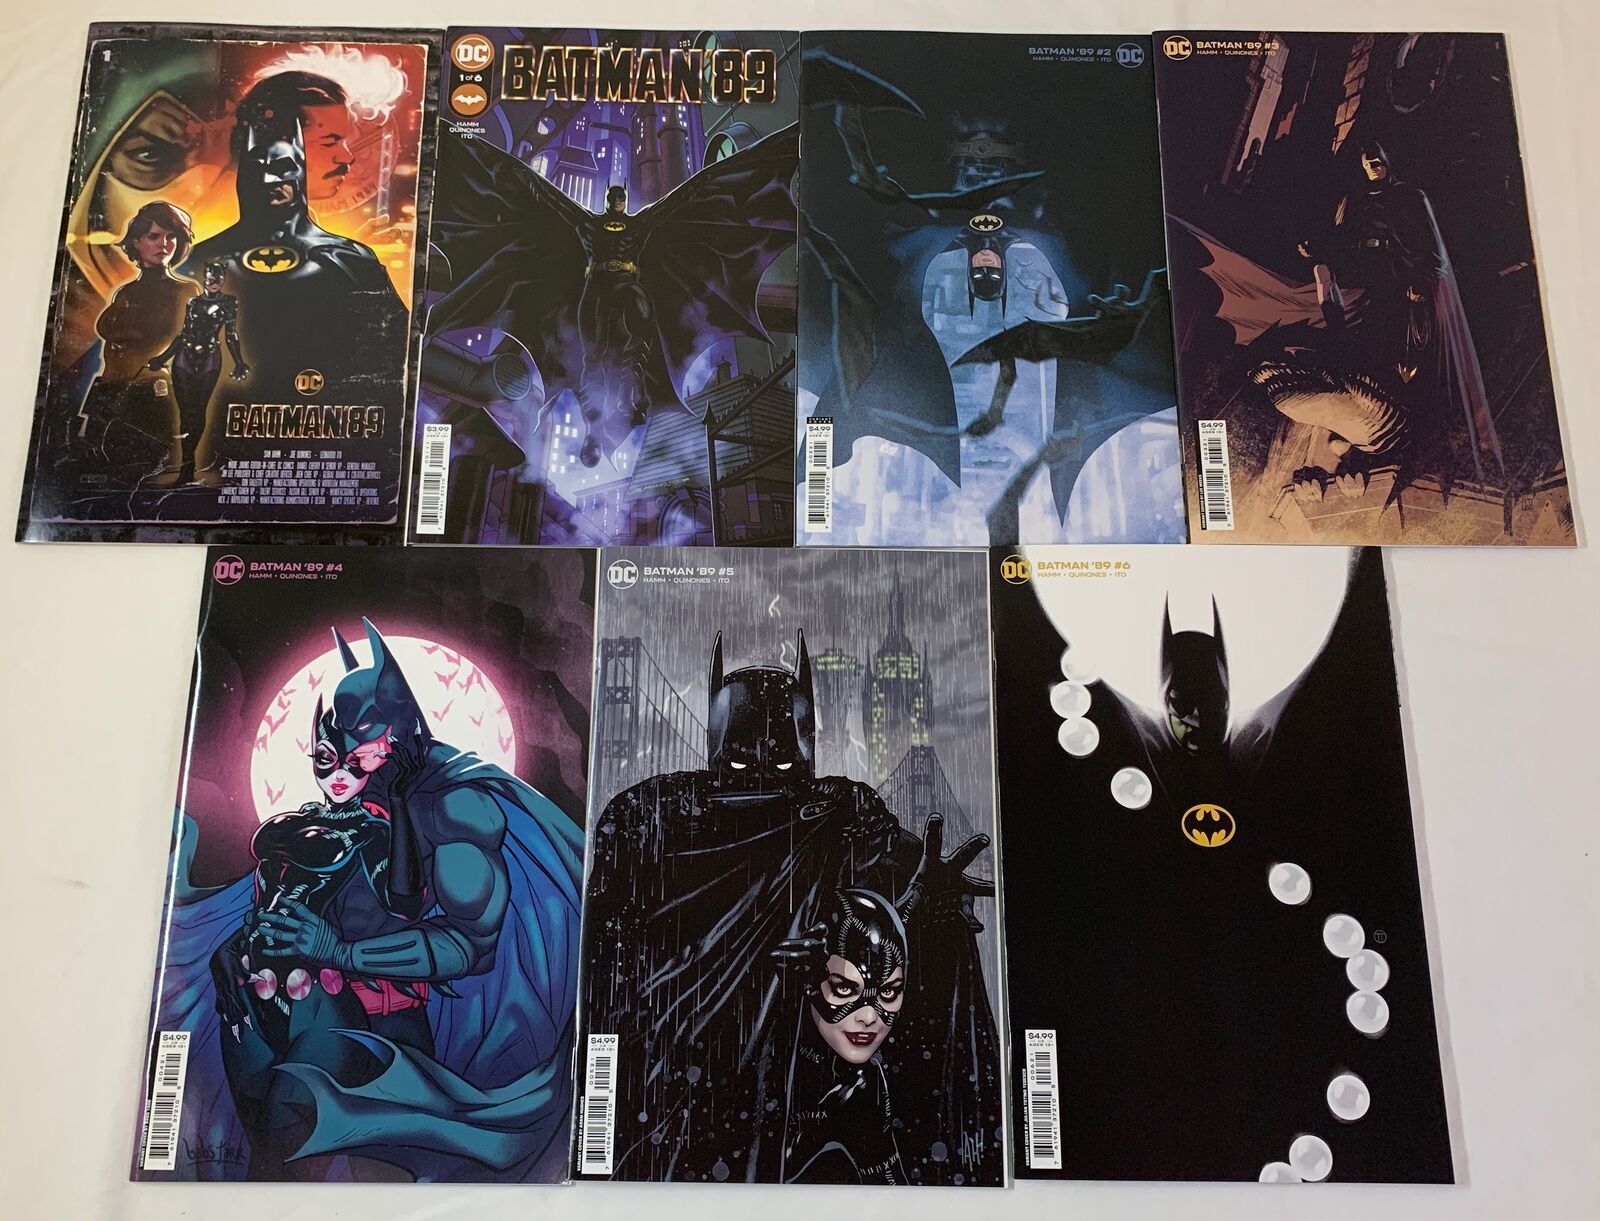 DC Comics BATMAN '89 #1 1 2 3 4 5 6 ~ FULL SET plus additional #1 variant